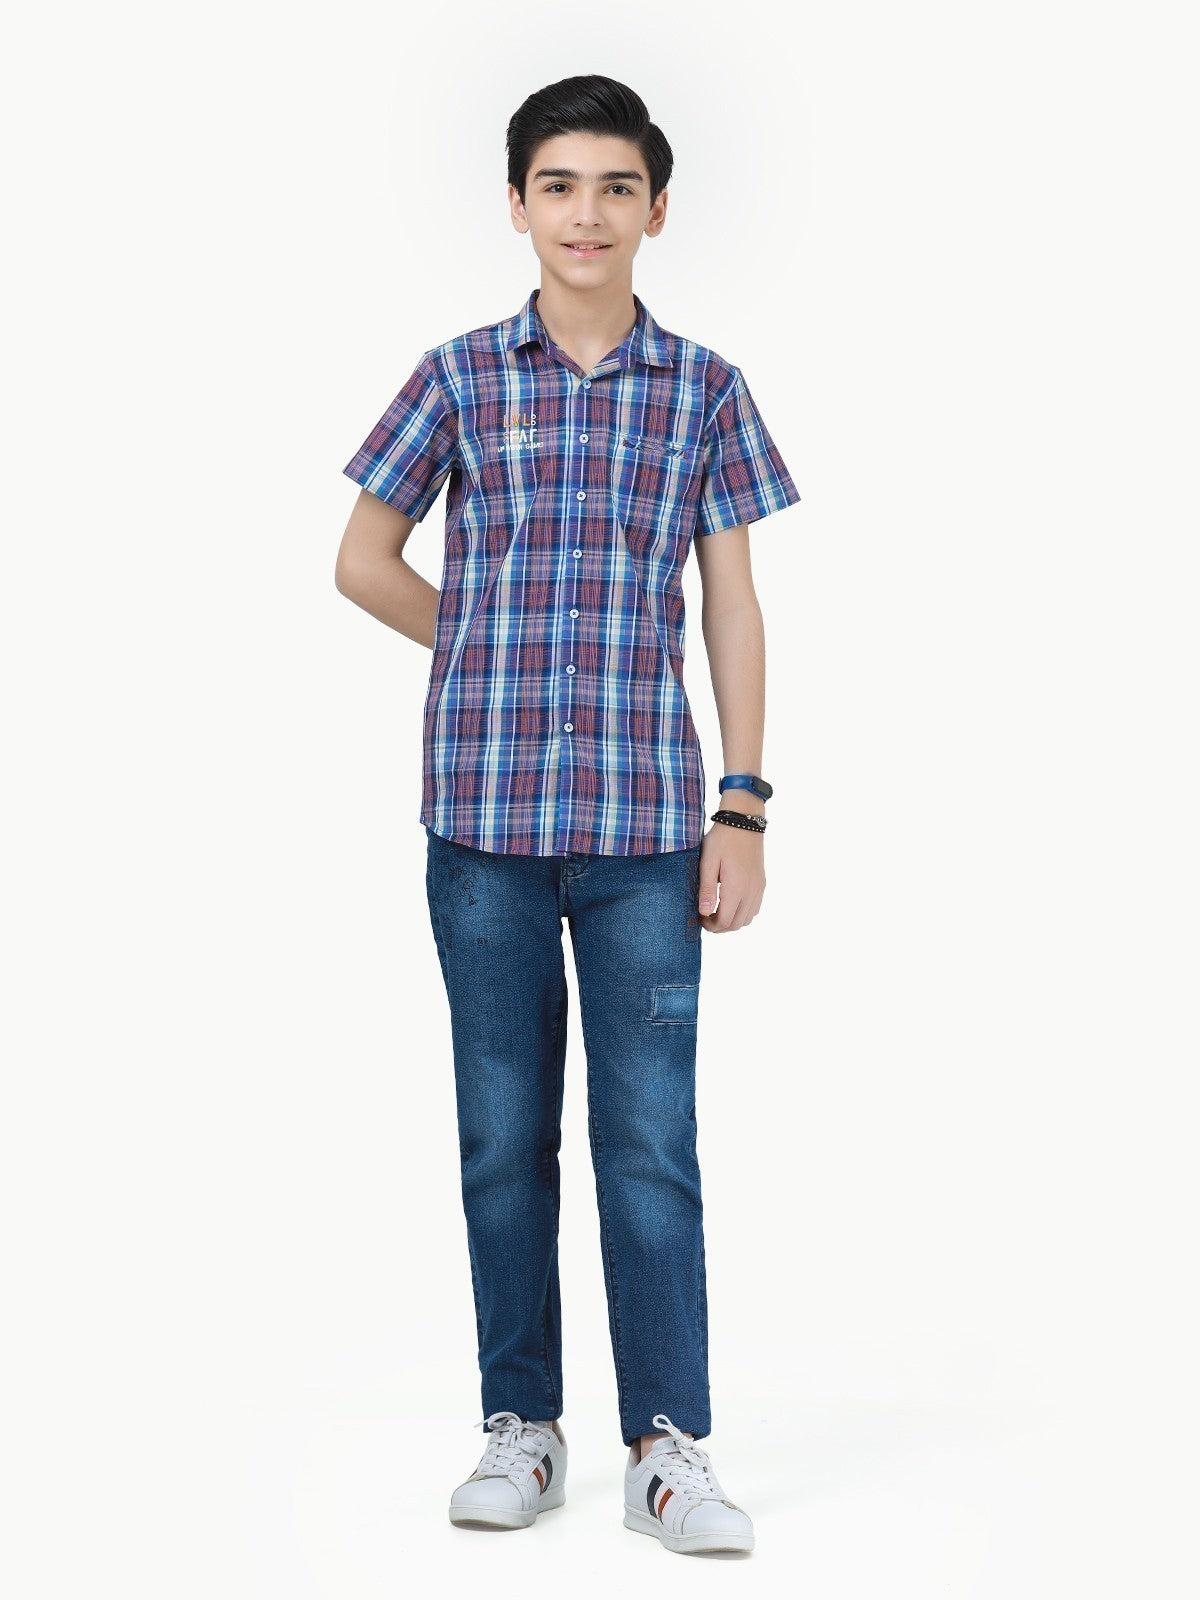 Boy's Multi Shirt - EBTS22-27412